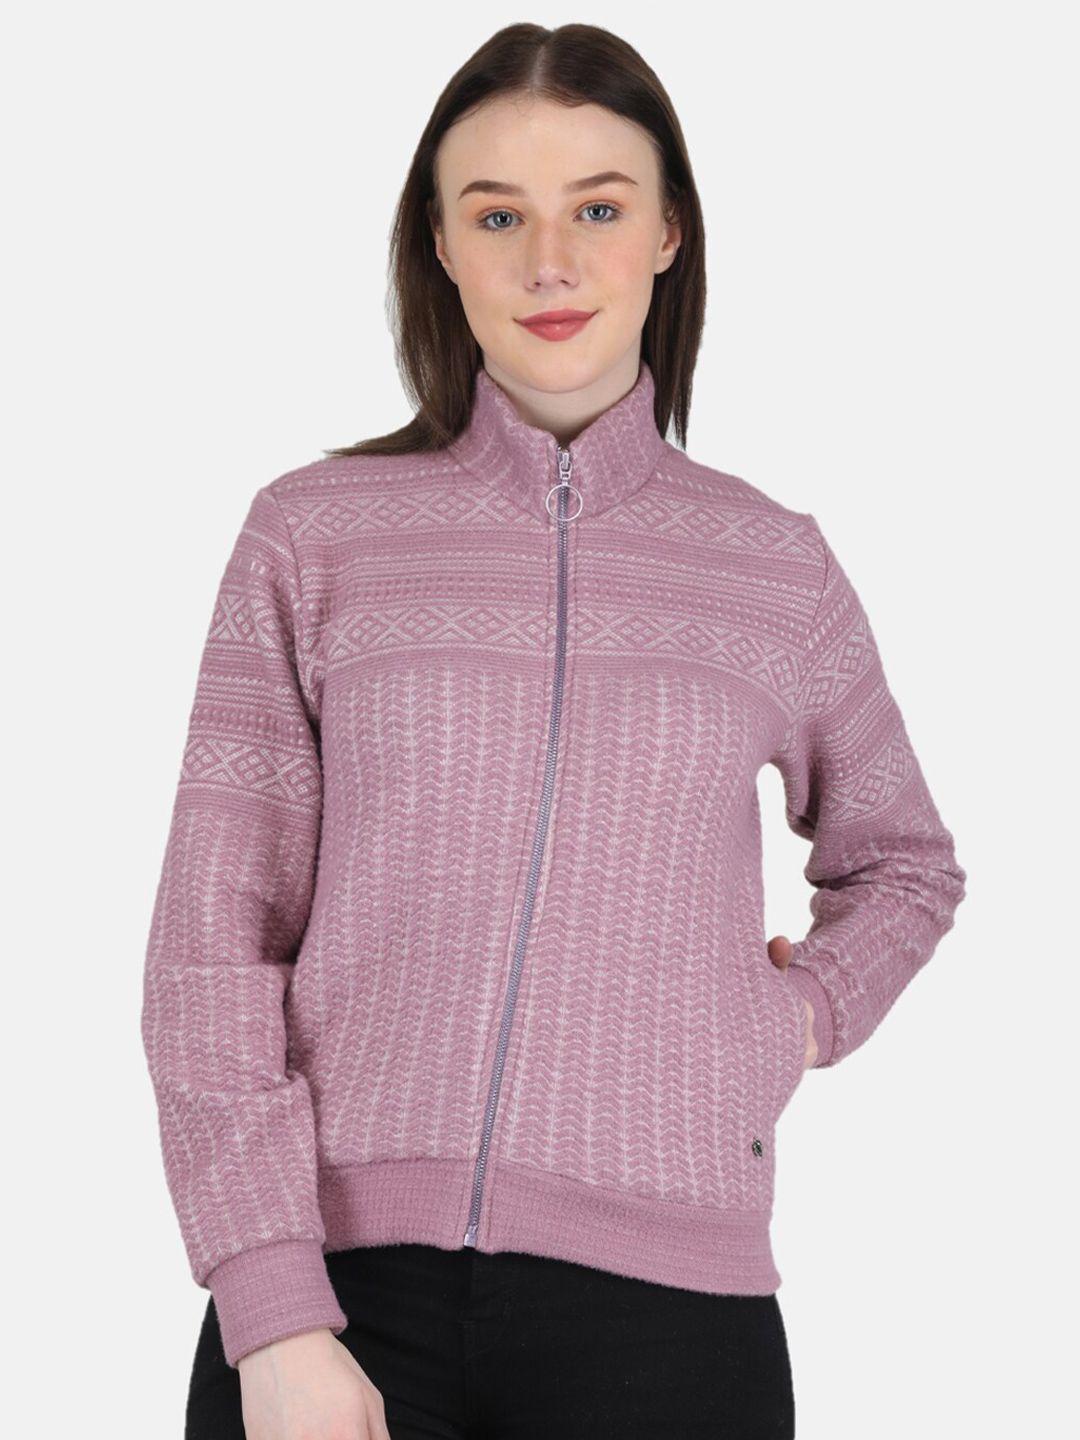 monte carlo front-open cotton sweatshirt